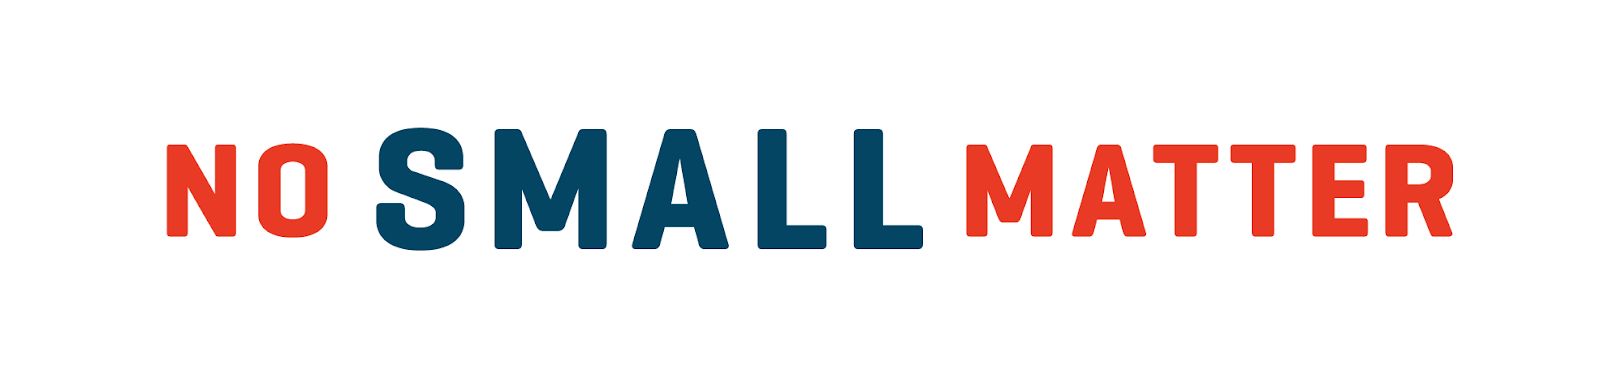 No Small Matter logo